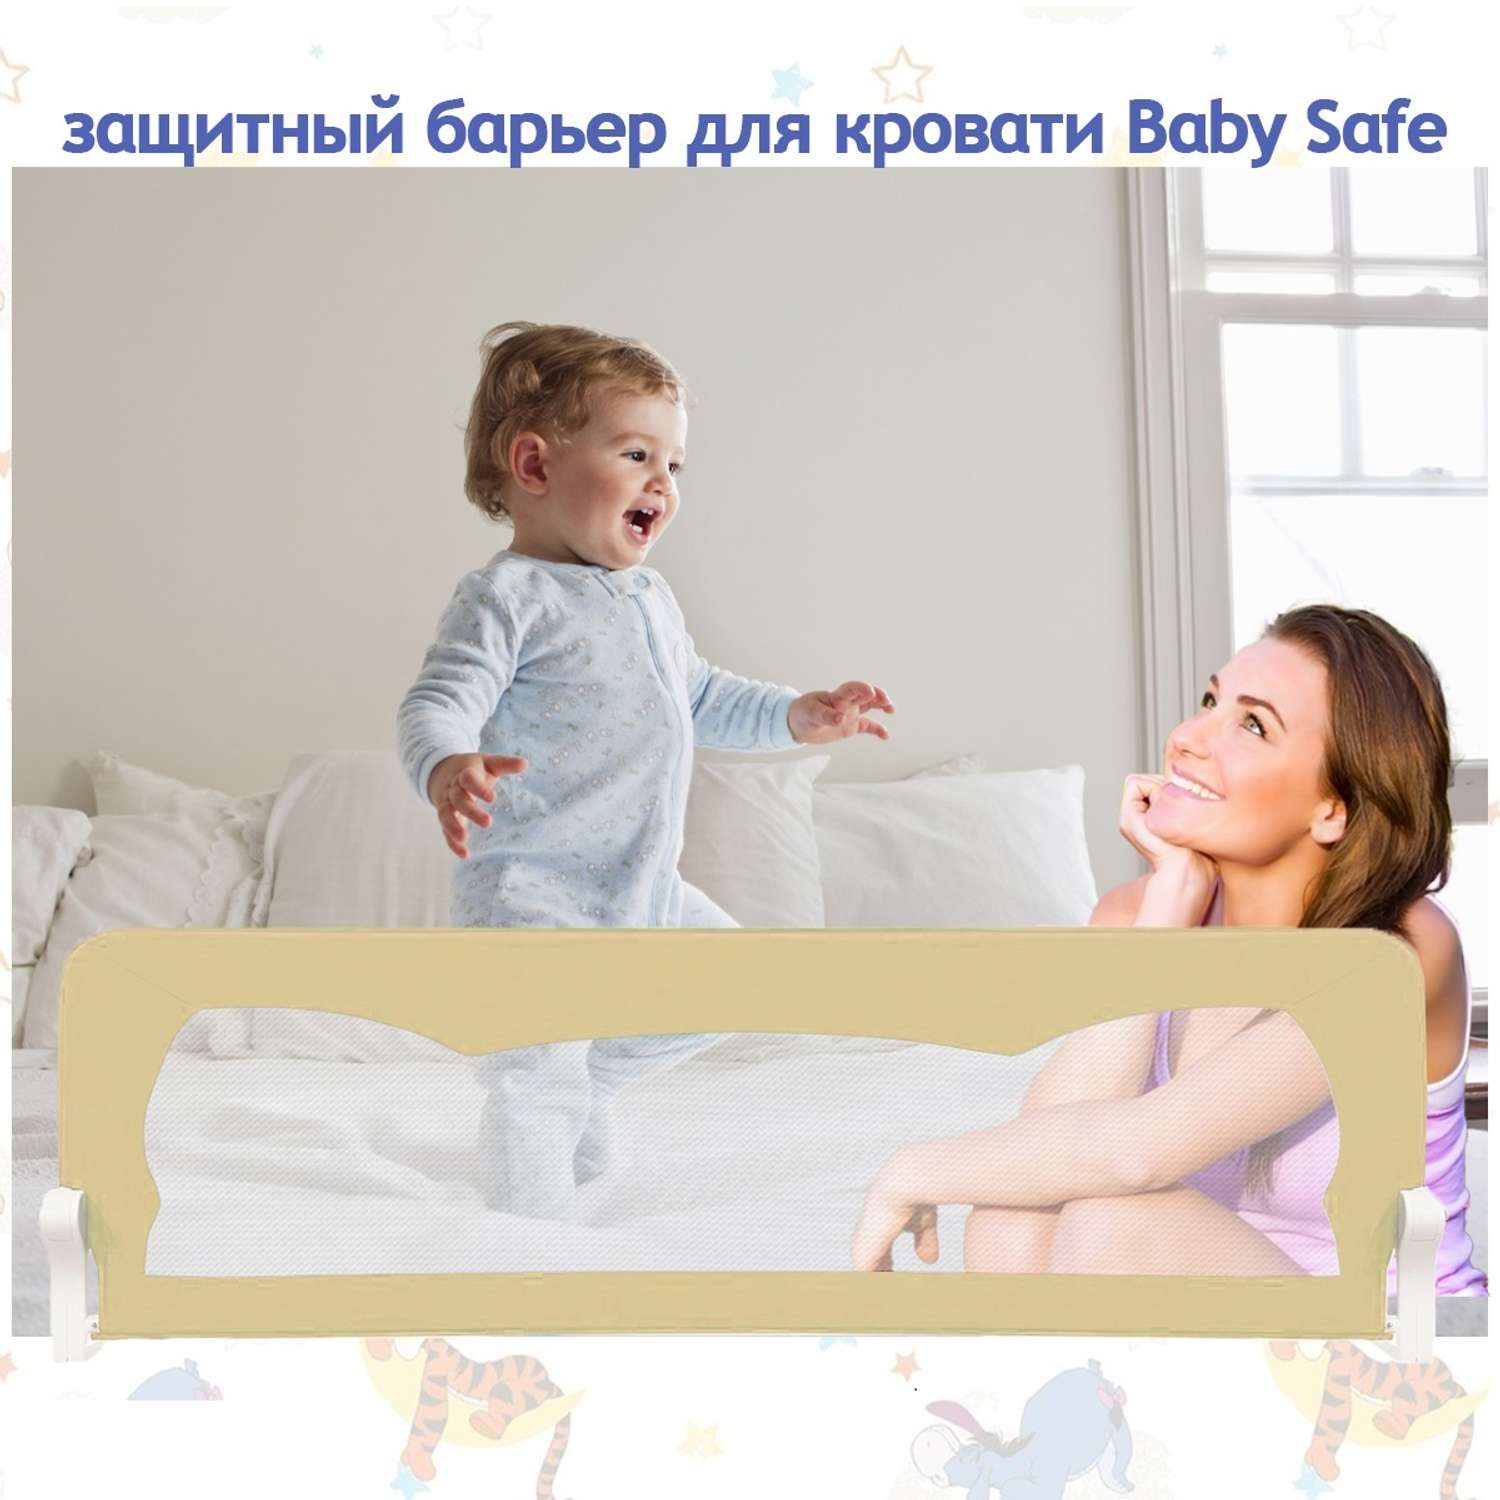 Барьер защитный для кровати Baby Safe защитный для кровати Ушки 120х66 бежевый - фото 1